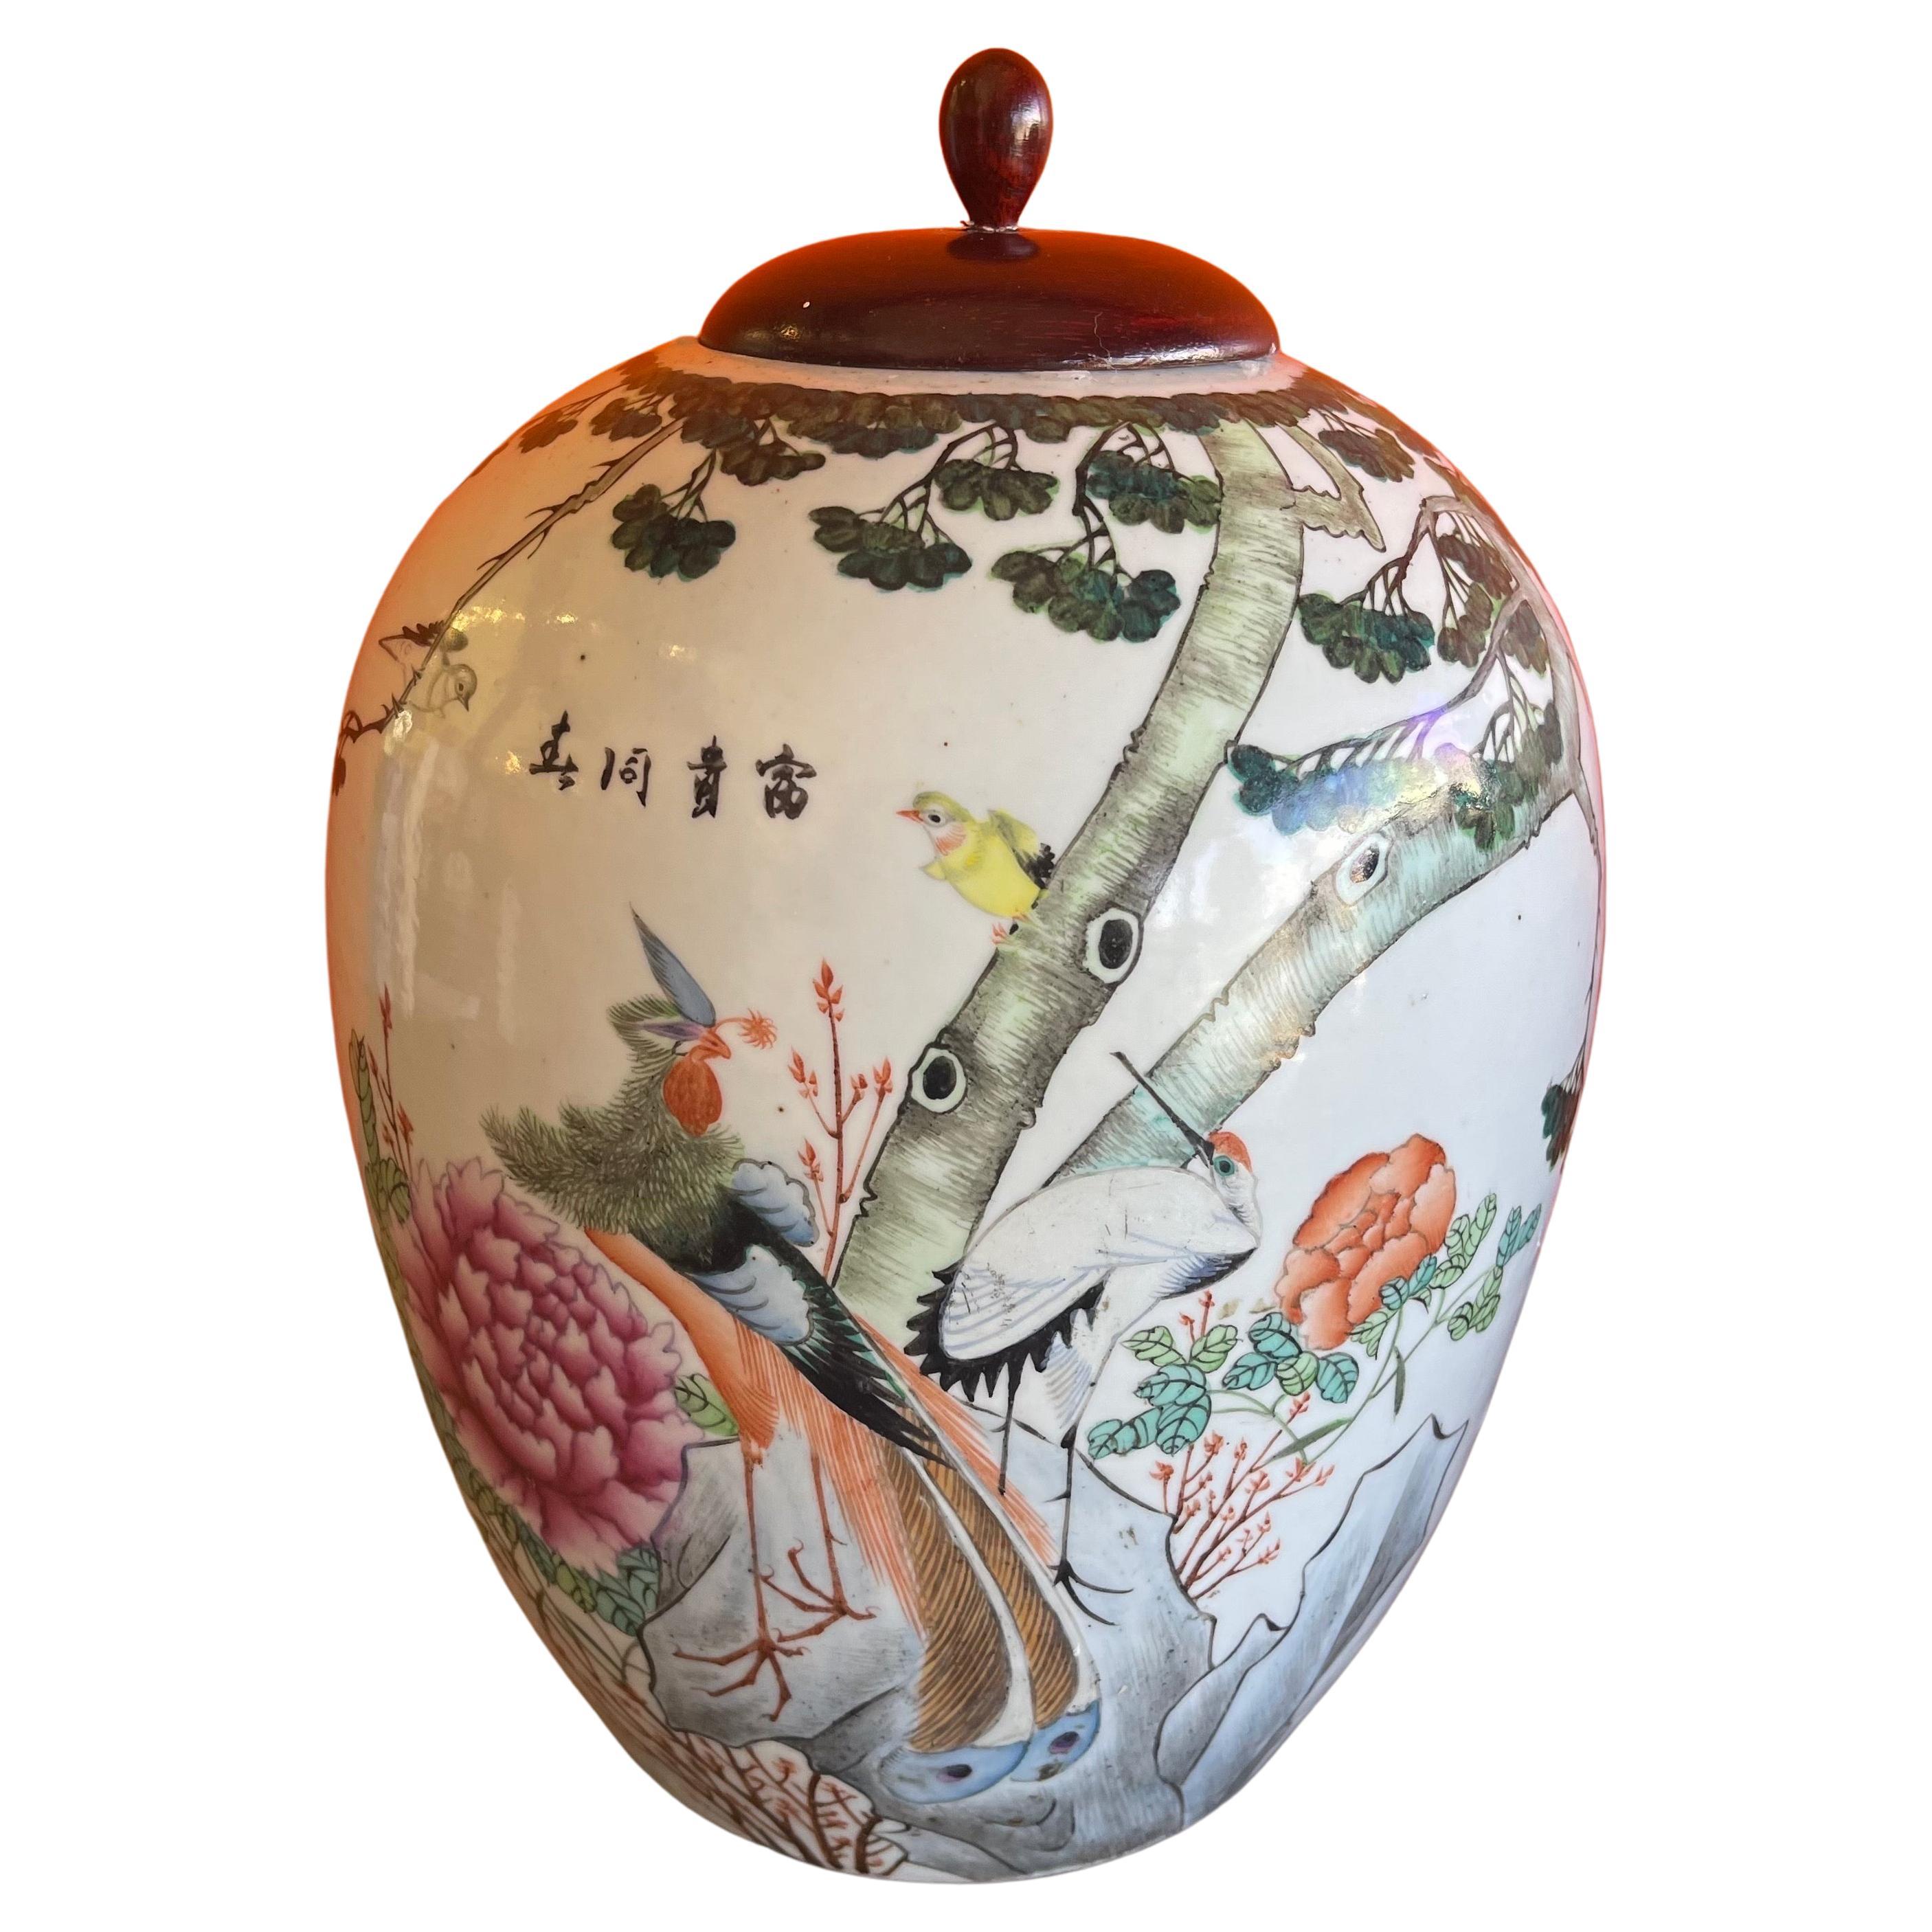 Chinesisches handbemaltes Keramikkrug aus der Republic-Periode